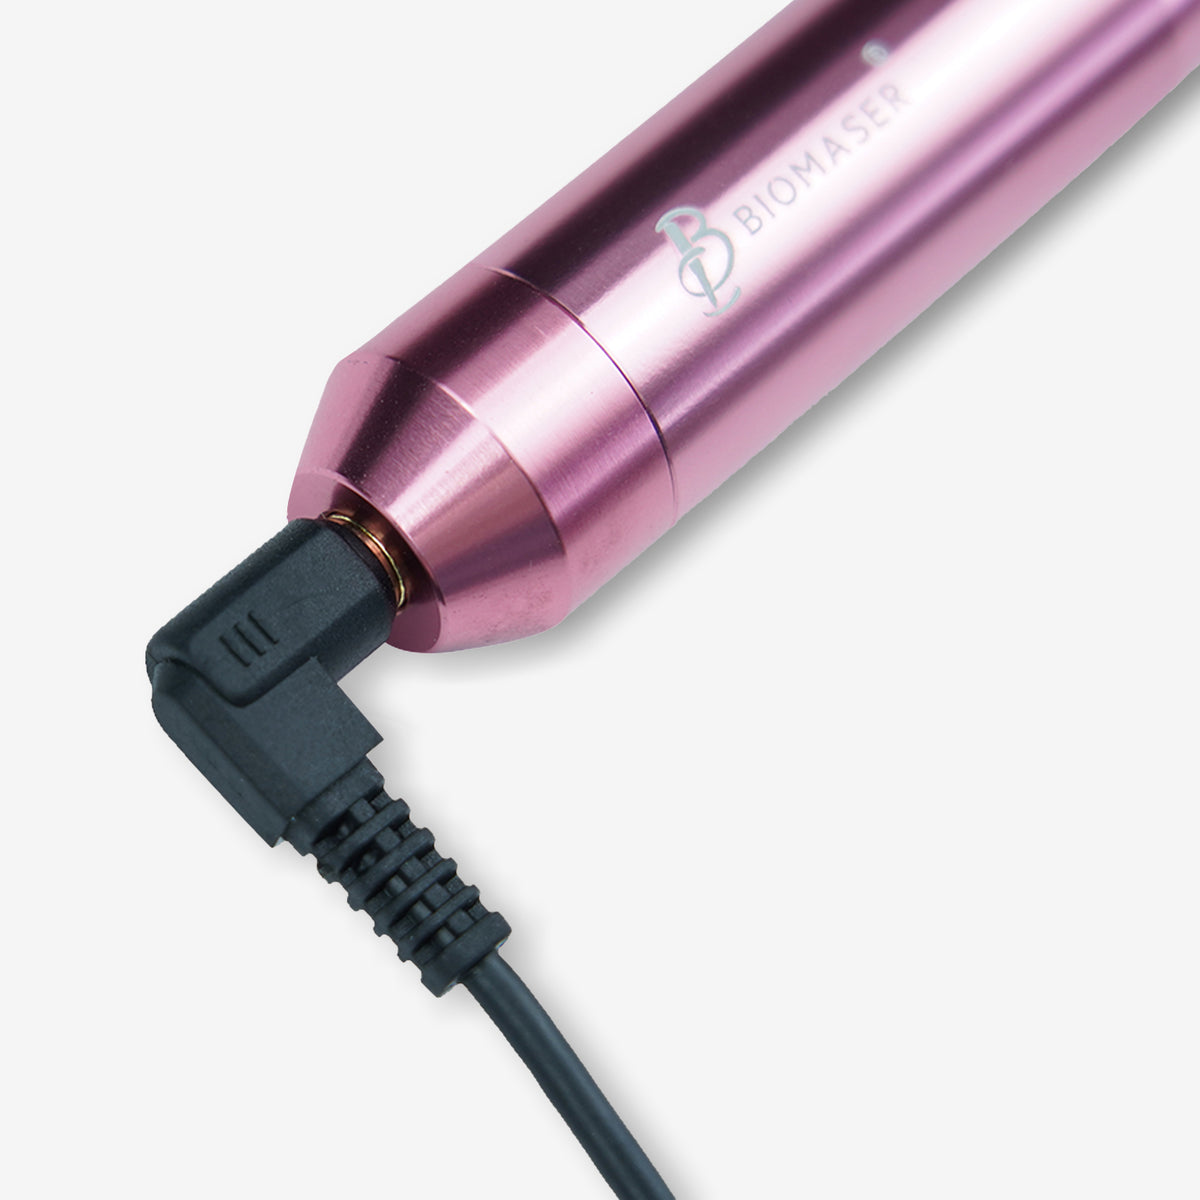 Biomaser Payment makeup Machine Clip Cord 3.5mm Connection Cable Suitable for All Biomaser  Permanent Makeup Pens